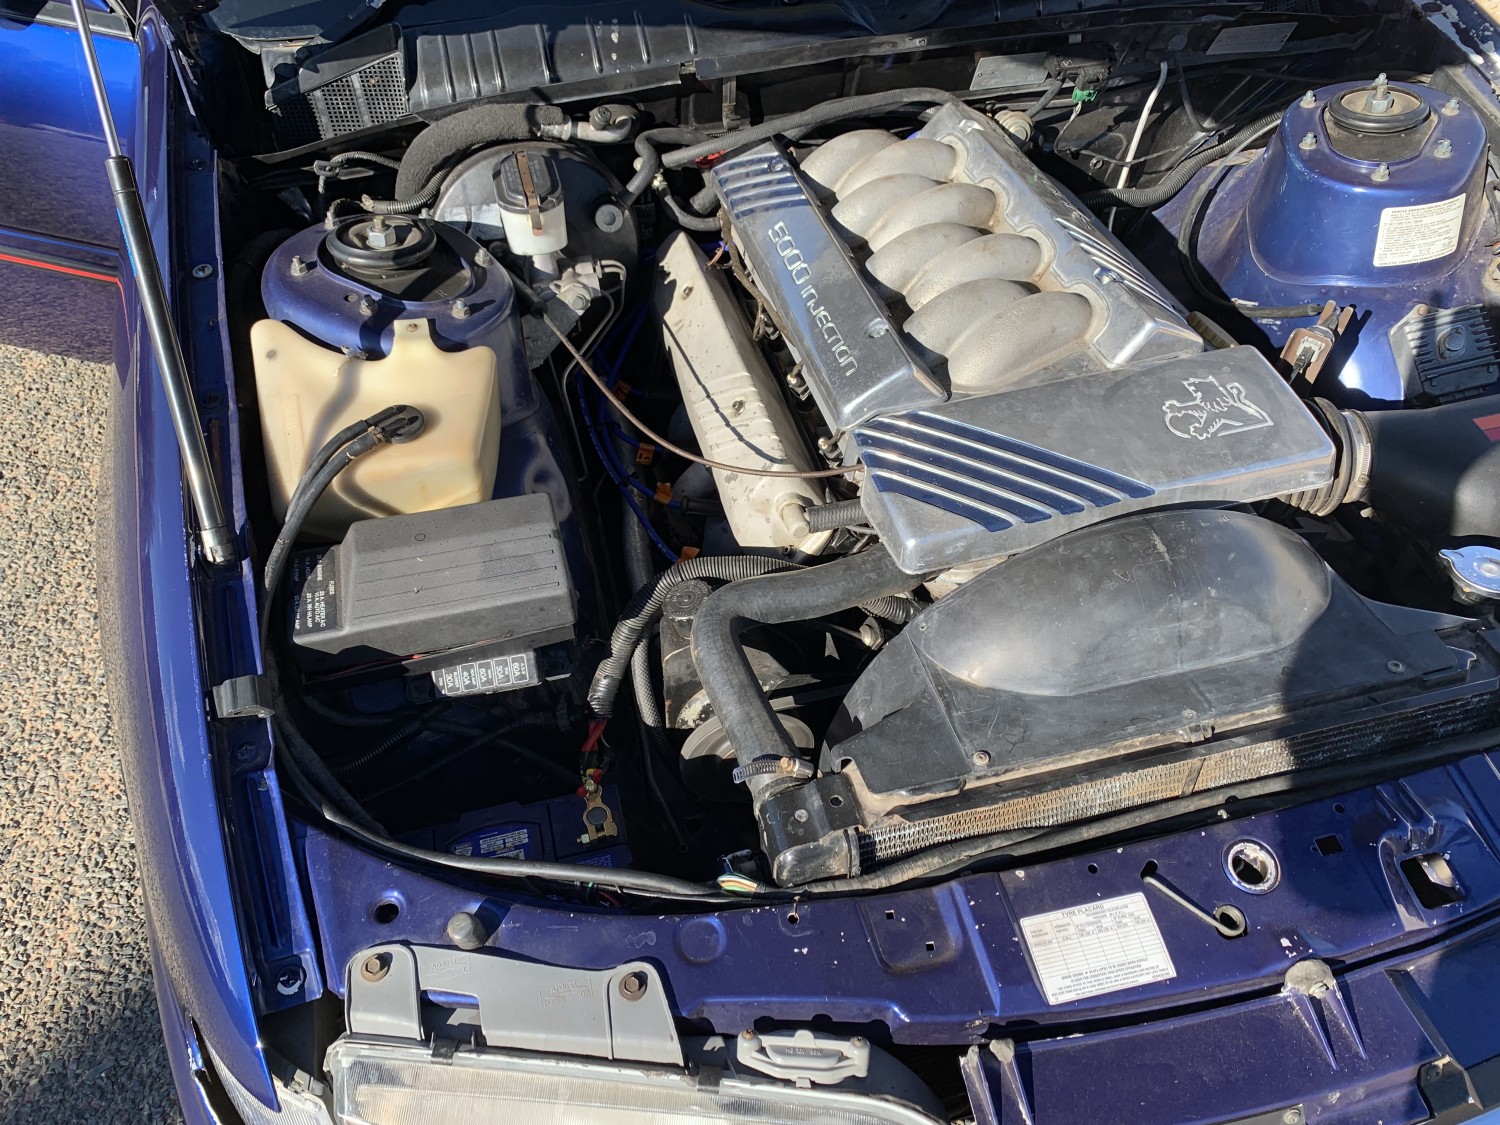 1997 Holden Vs spac